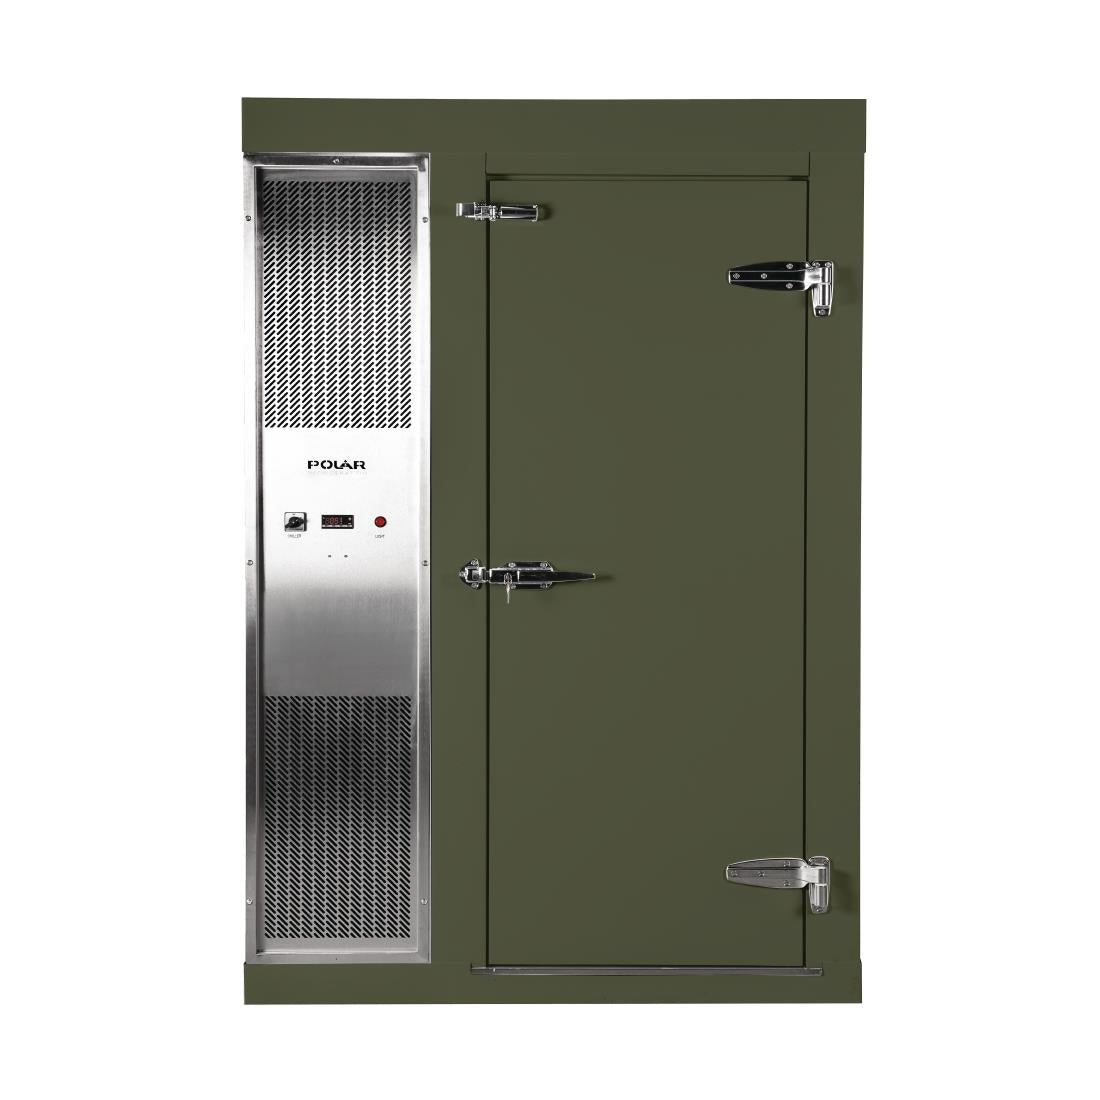 DS482-CGN Polar U-Series 1.5 x 1.8m Integral Walk In Cold Room Green JD Catering Equipment Solutions Ltd